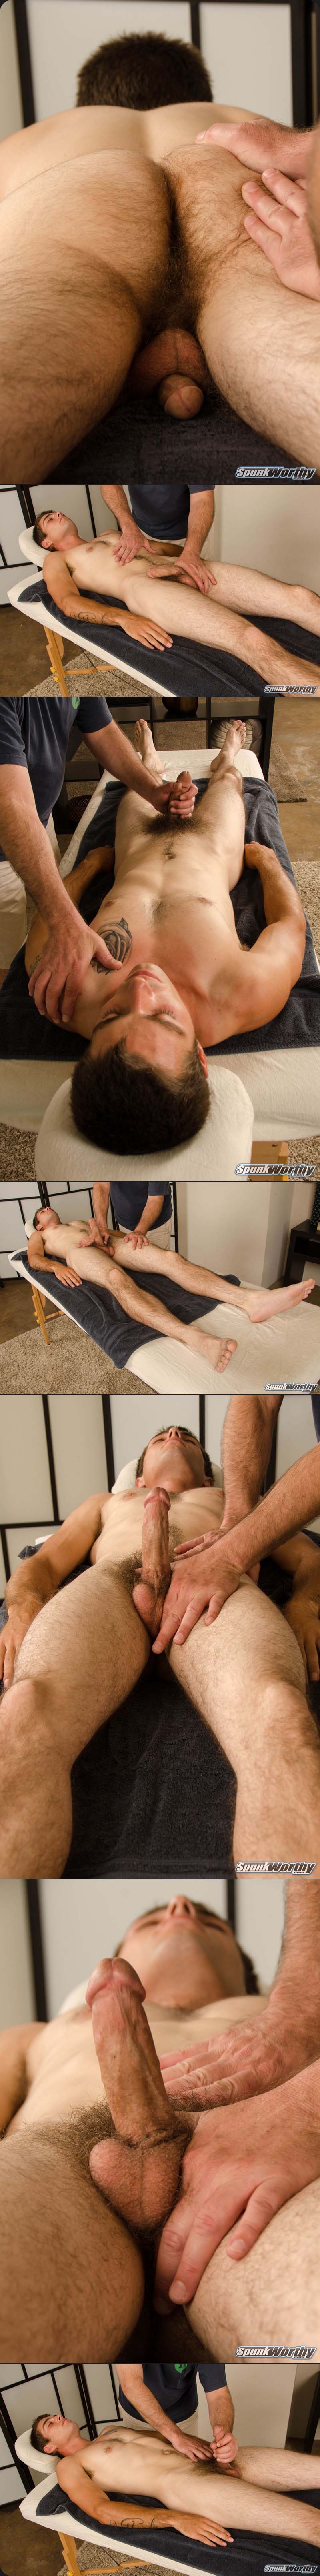 Niles' Massage at SpunkWorthy.com